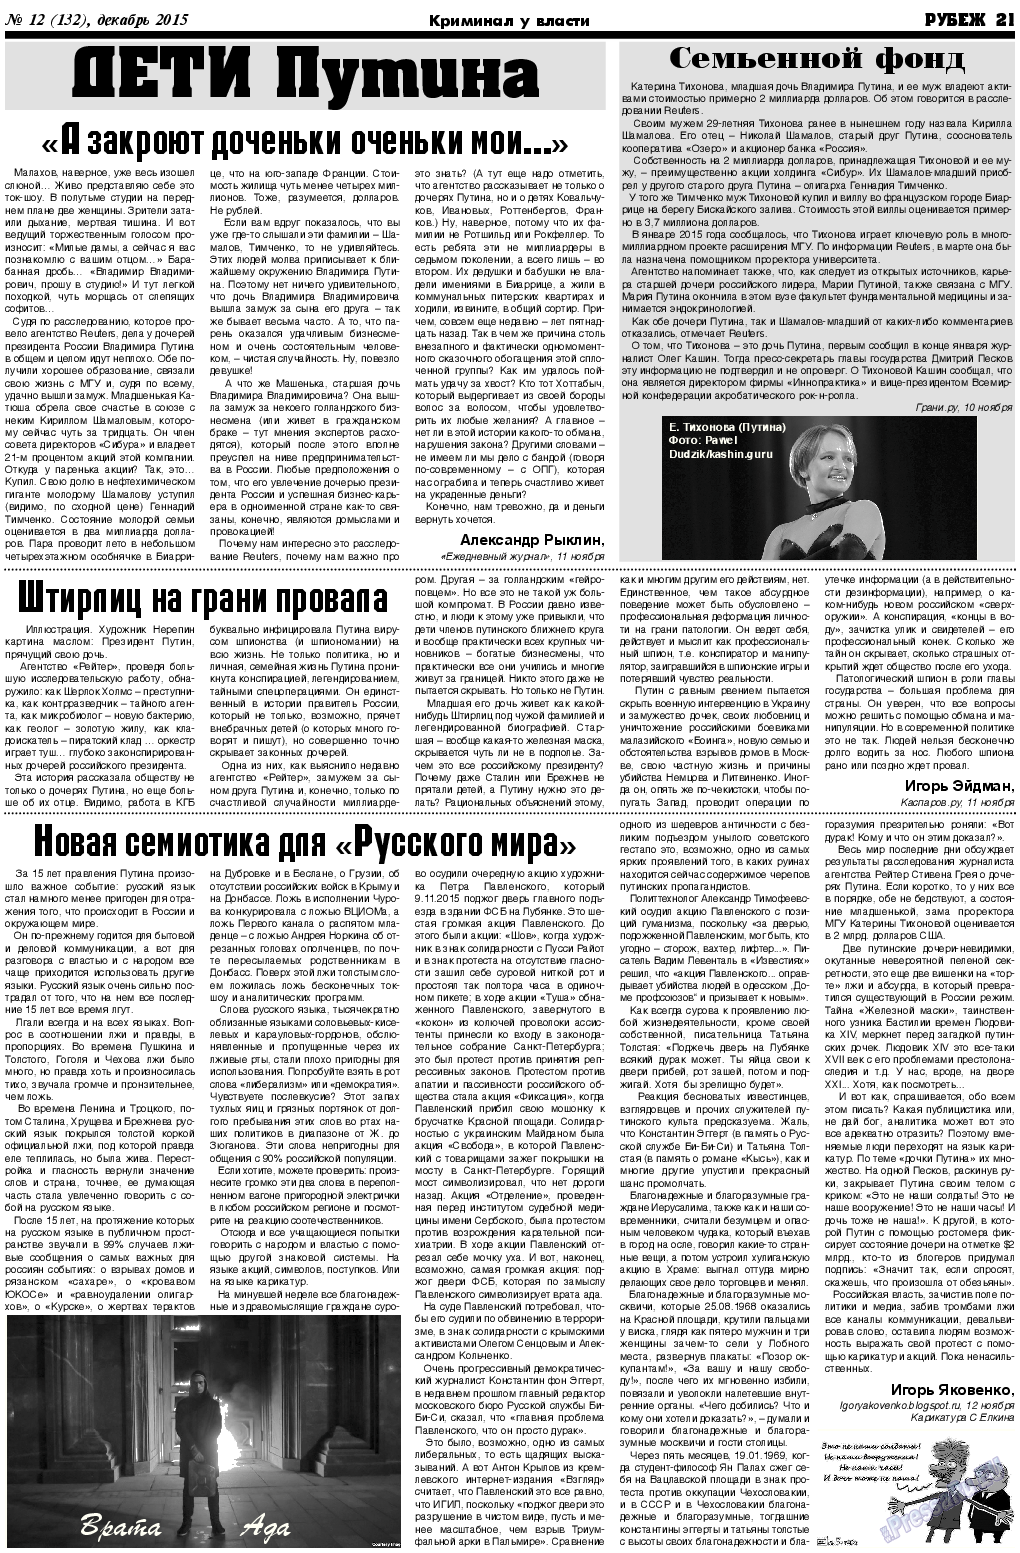 Рубеж, газета. 2015 №12 стр.21